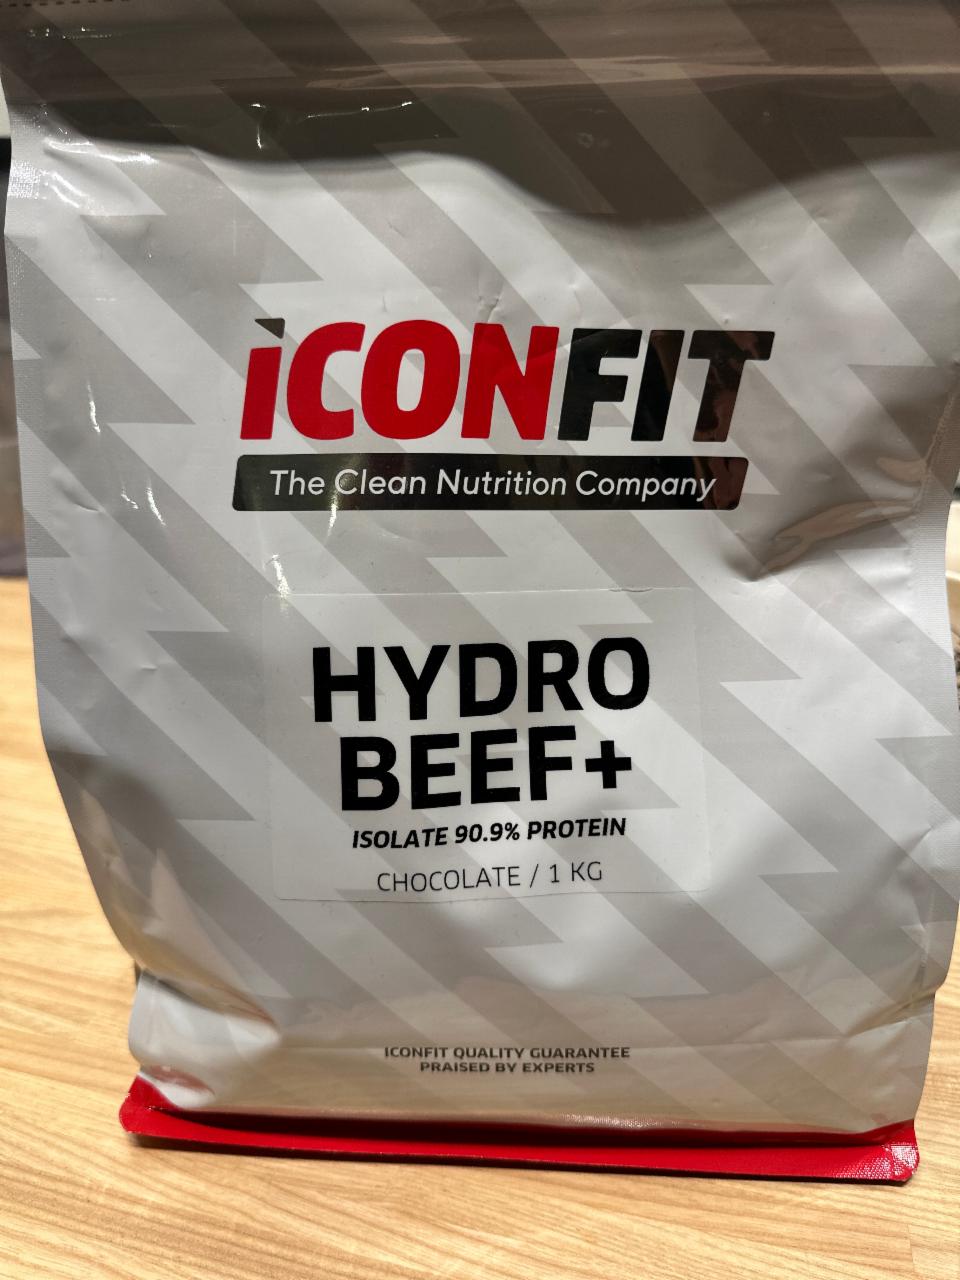 Фото - Hydro beef chocolate Iconfit